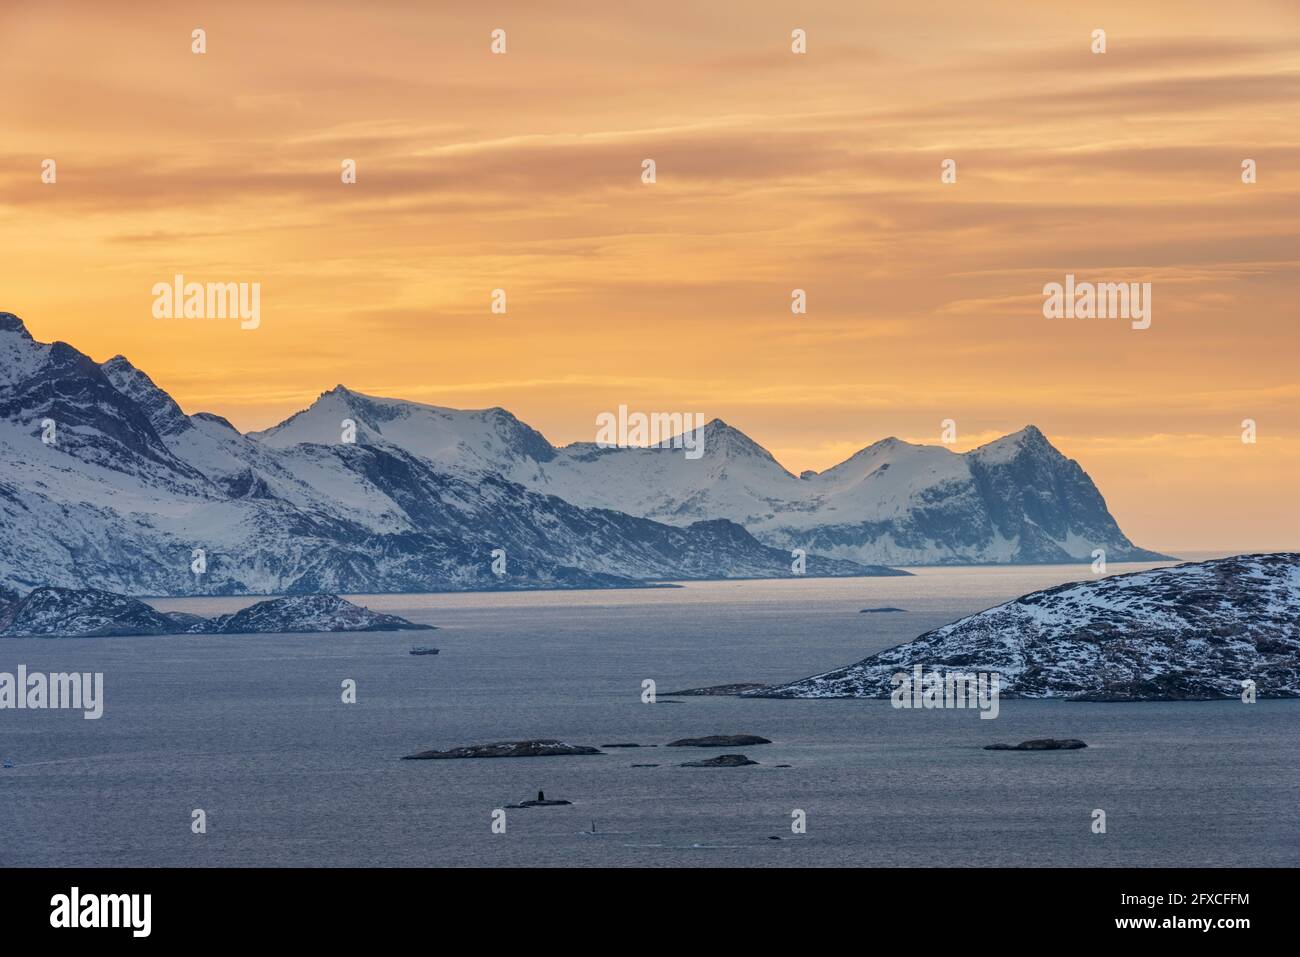 Norway, Tromso, Kvaloya, Dramatic sky over snowy mountain Senja Island seen from Kvaloya Island at sunset Stock Photo